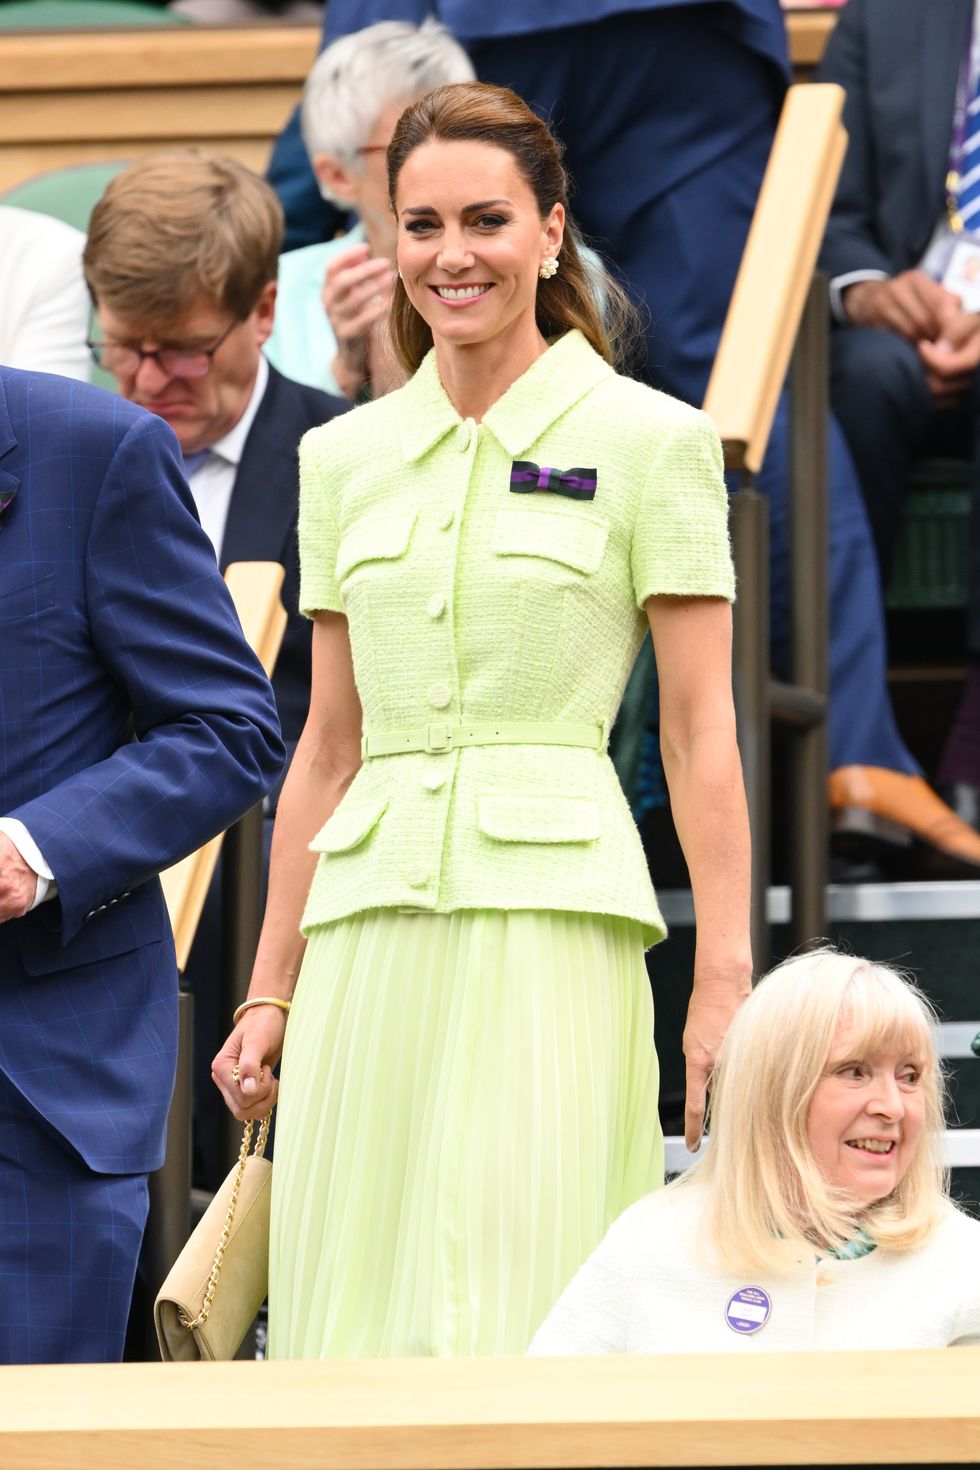 Kate Middleton Glows in a Bright Green Ensemble at Wimbledon Women's Finals